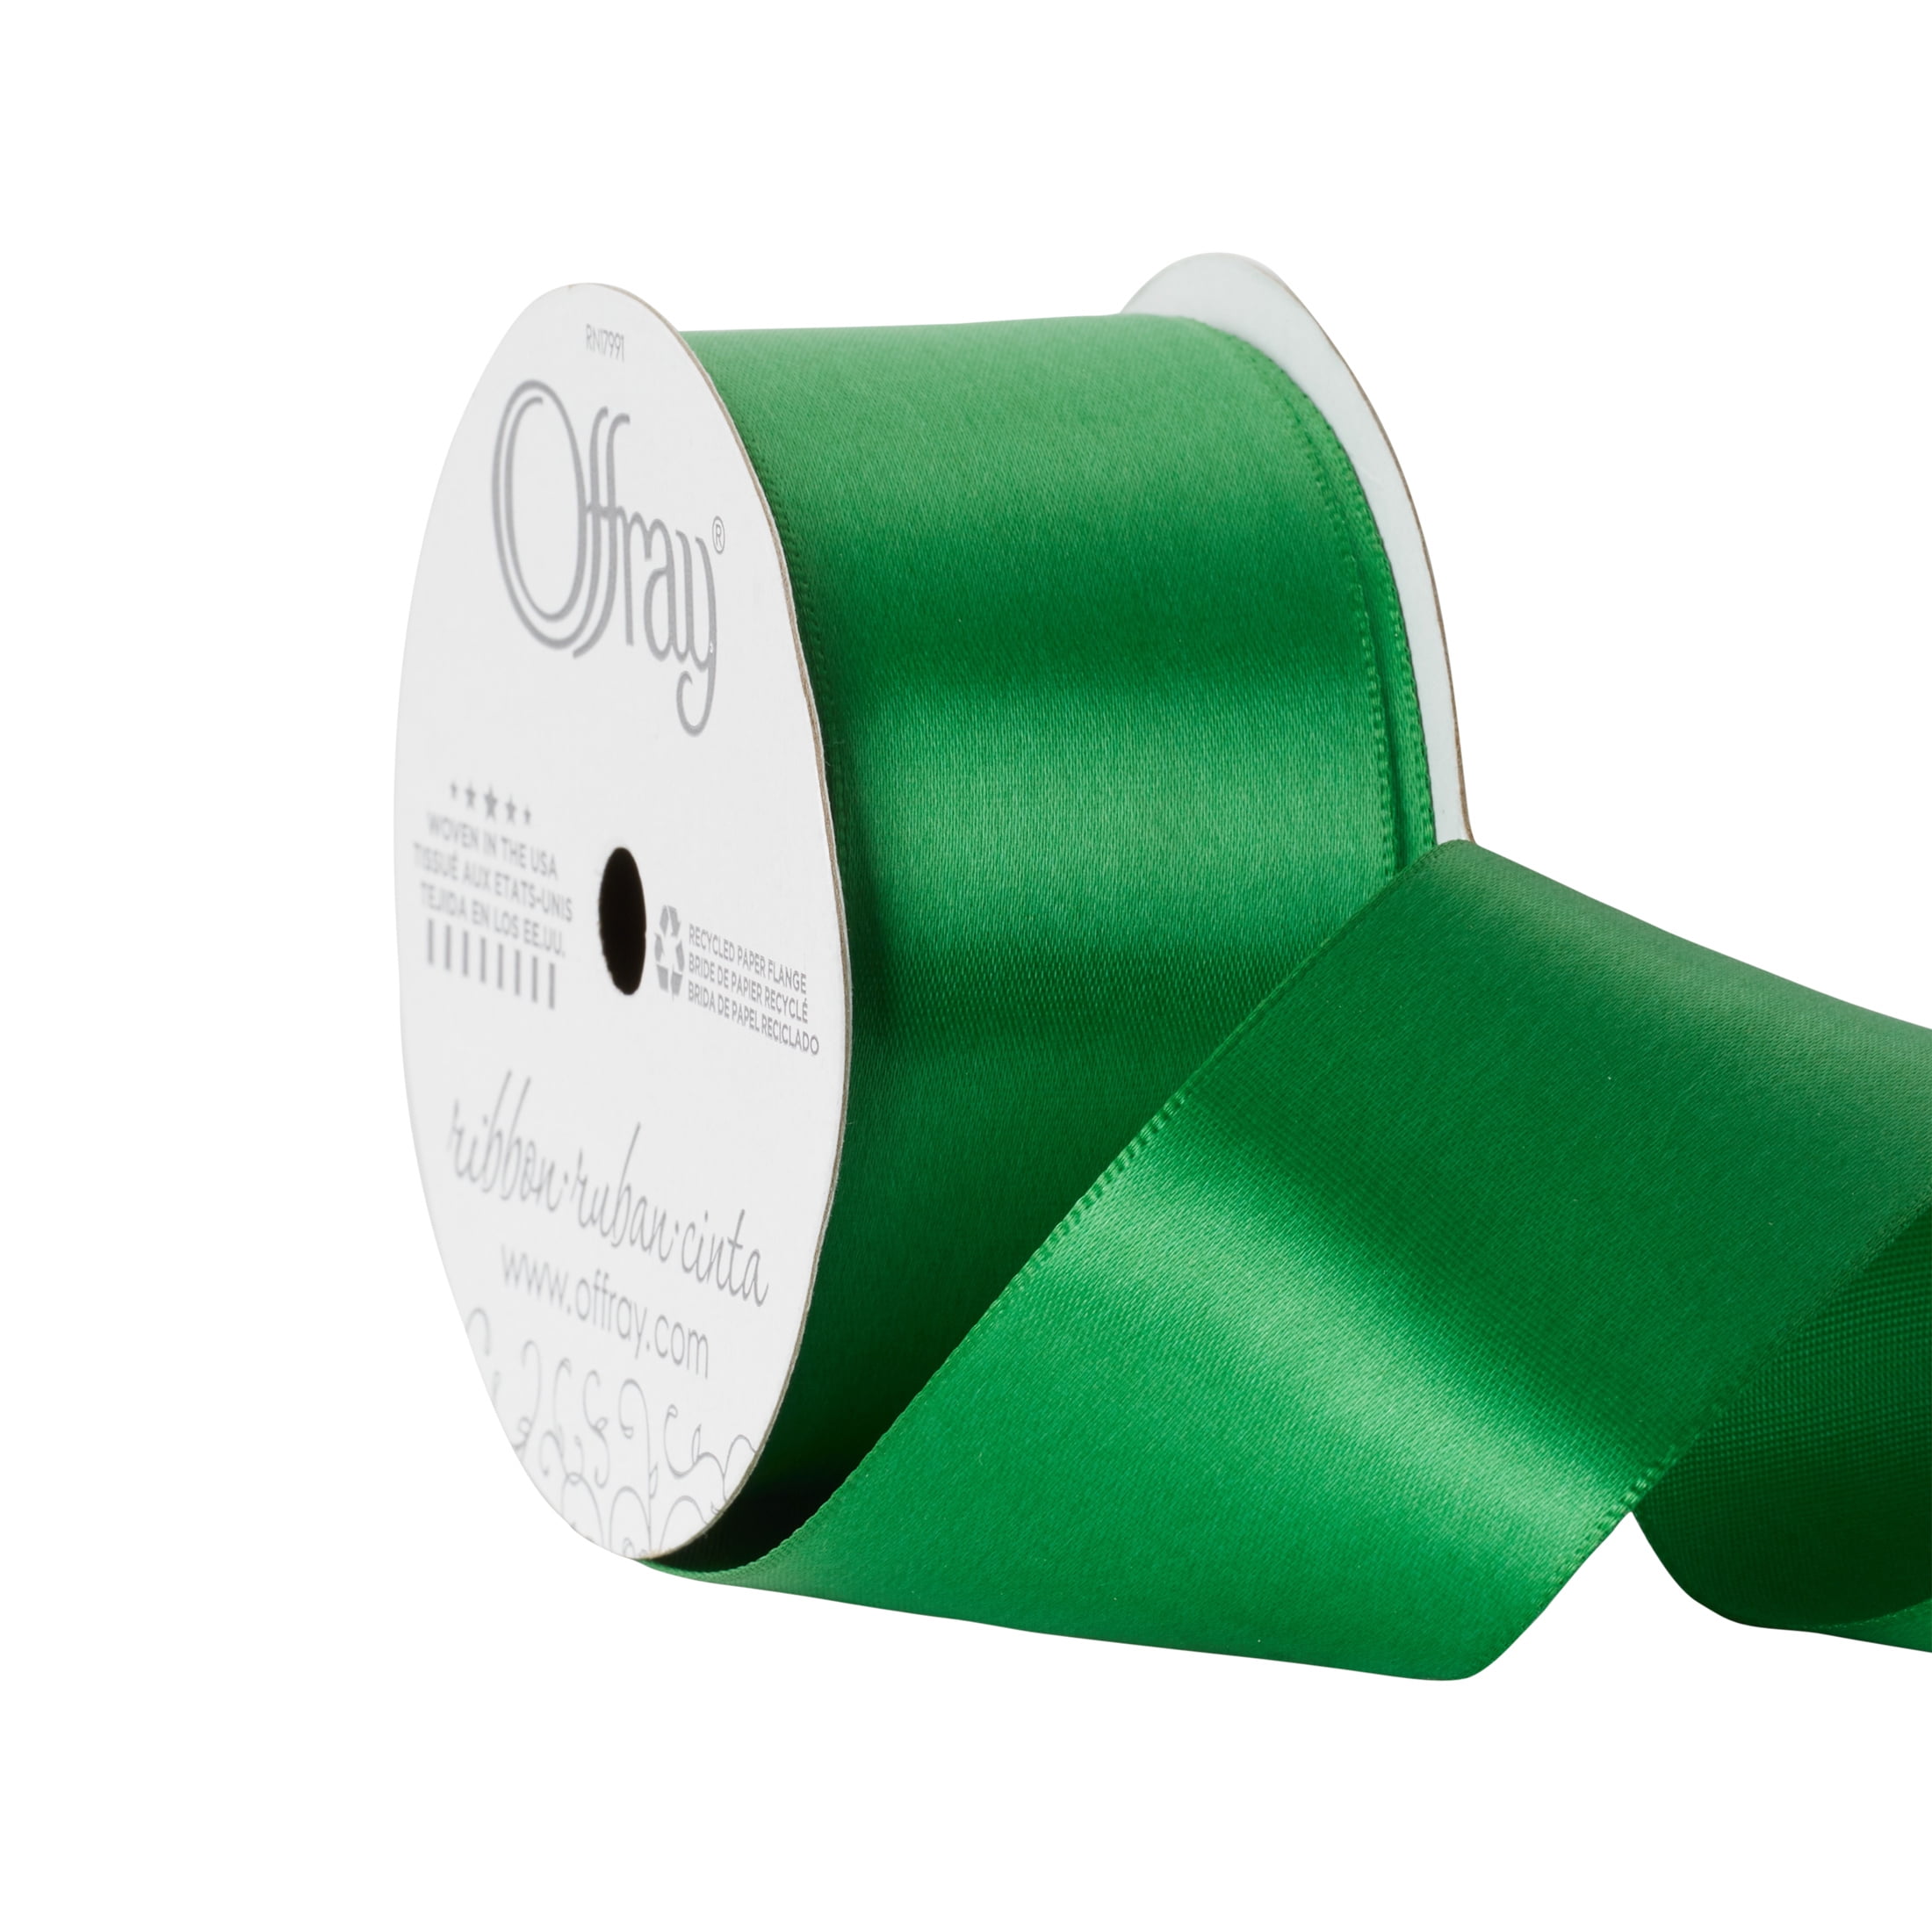 DirectFloral. #40 Satin Ribbon - Emerald